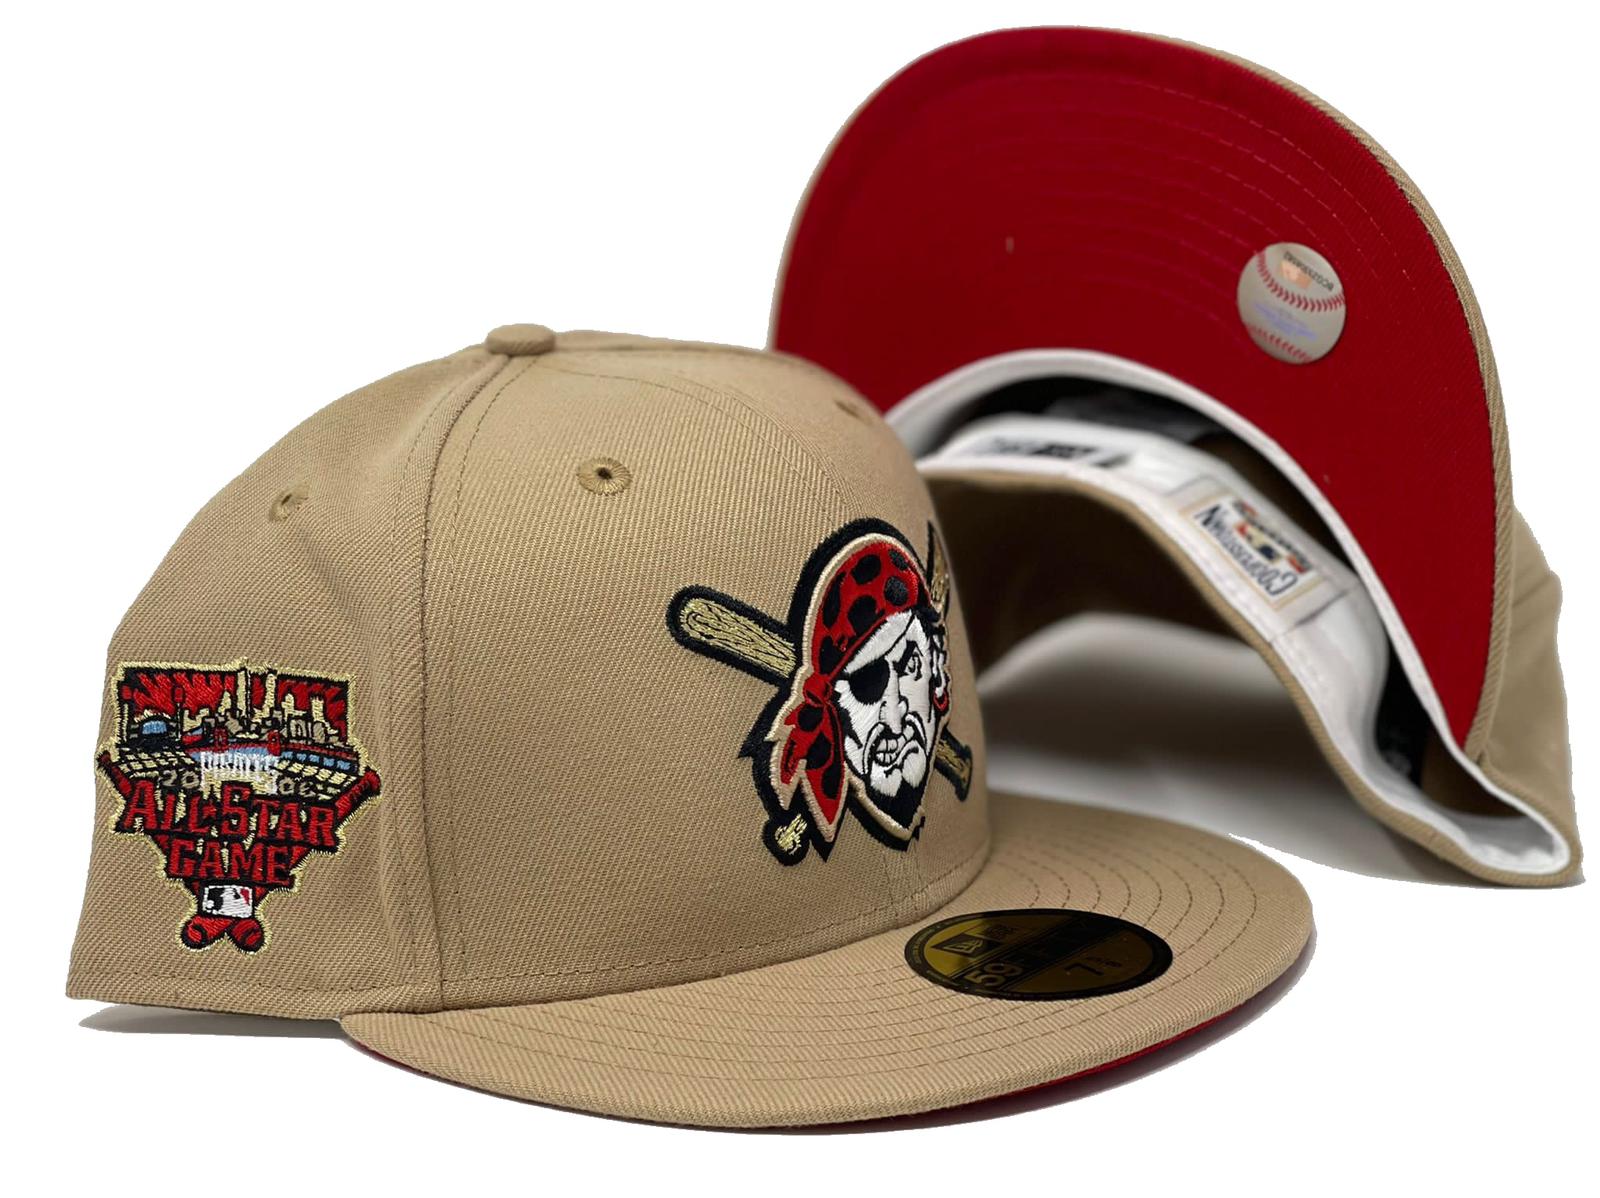 Pittsburgh Pirates 2006 All Star Game “Desert Camel” Red Brim New Era Hat